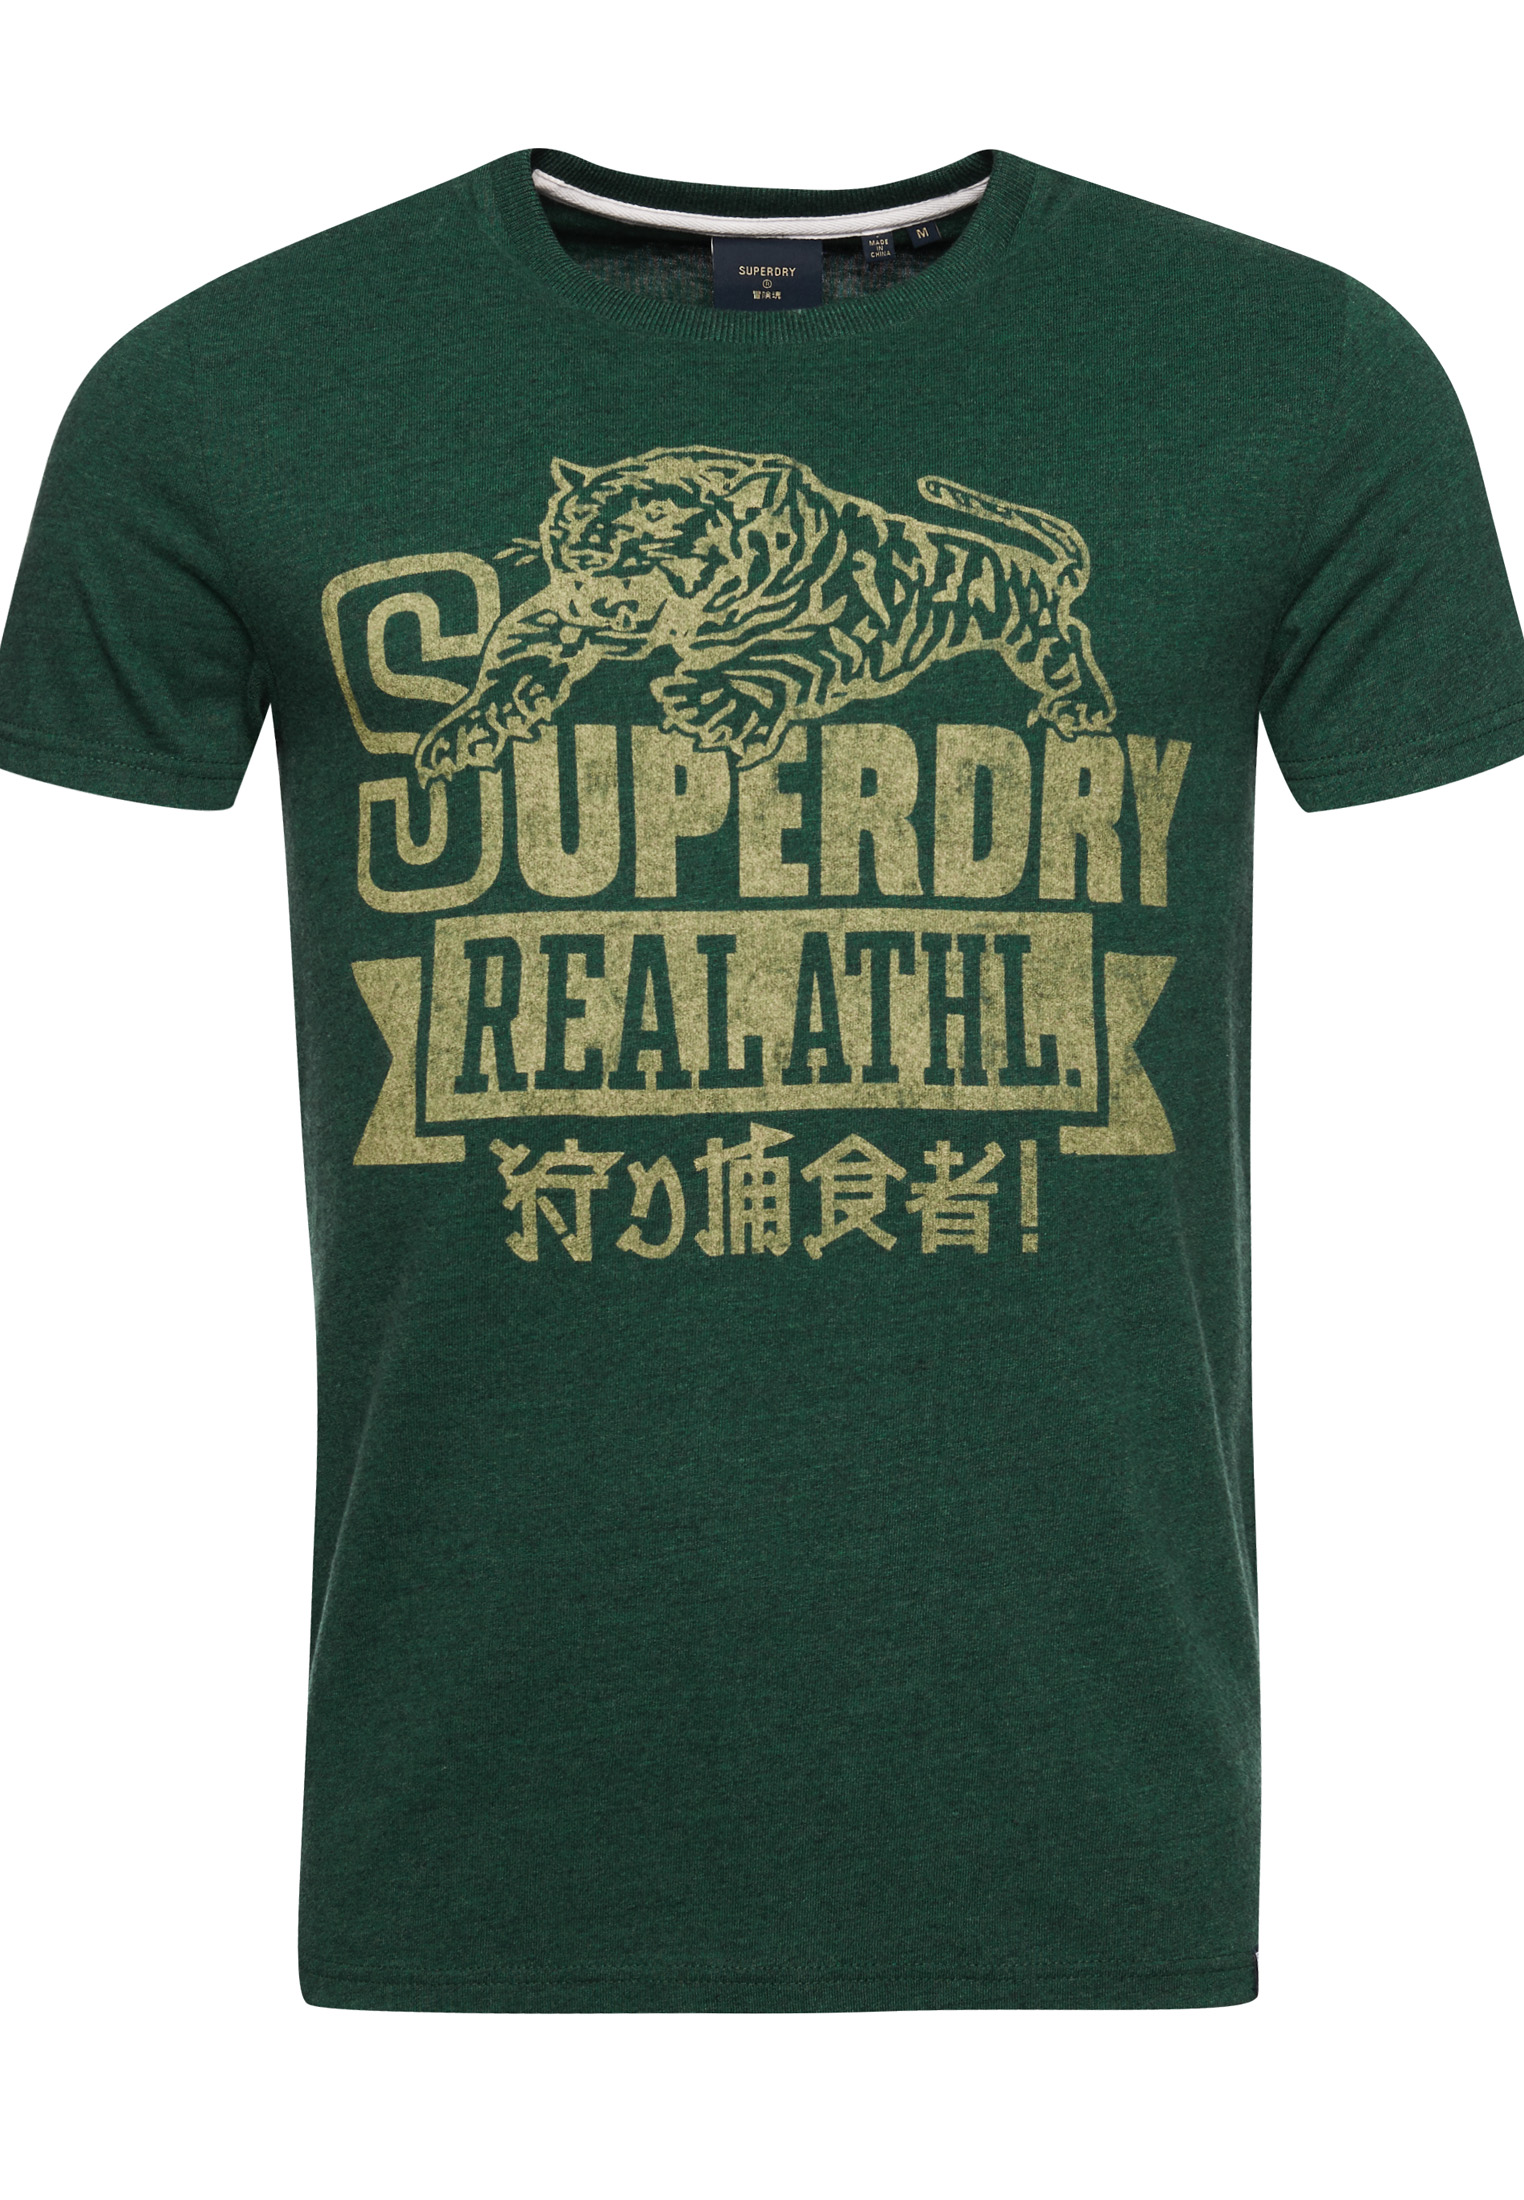 Superdry T-Shirt in Hellgrün, Grün 